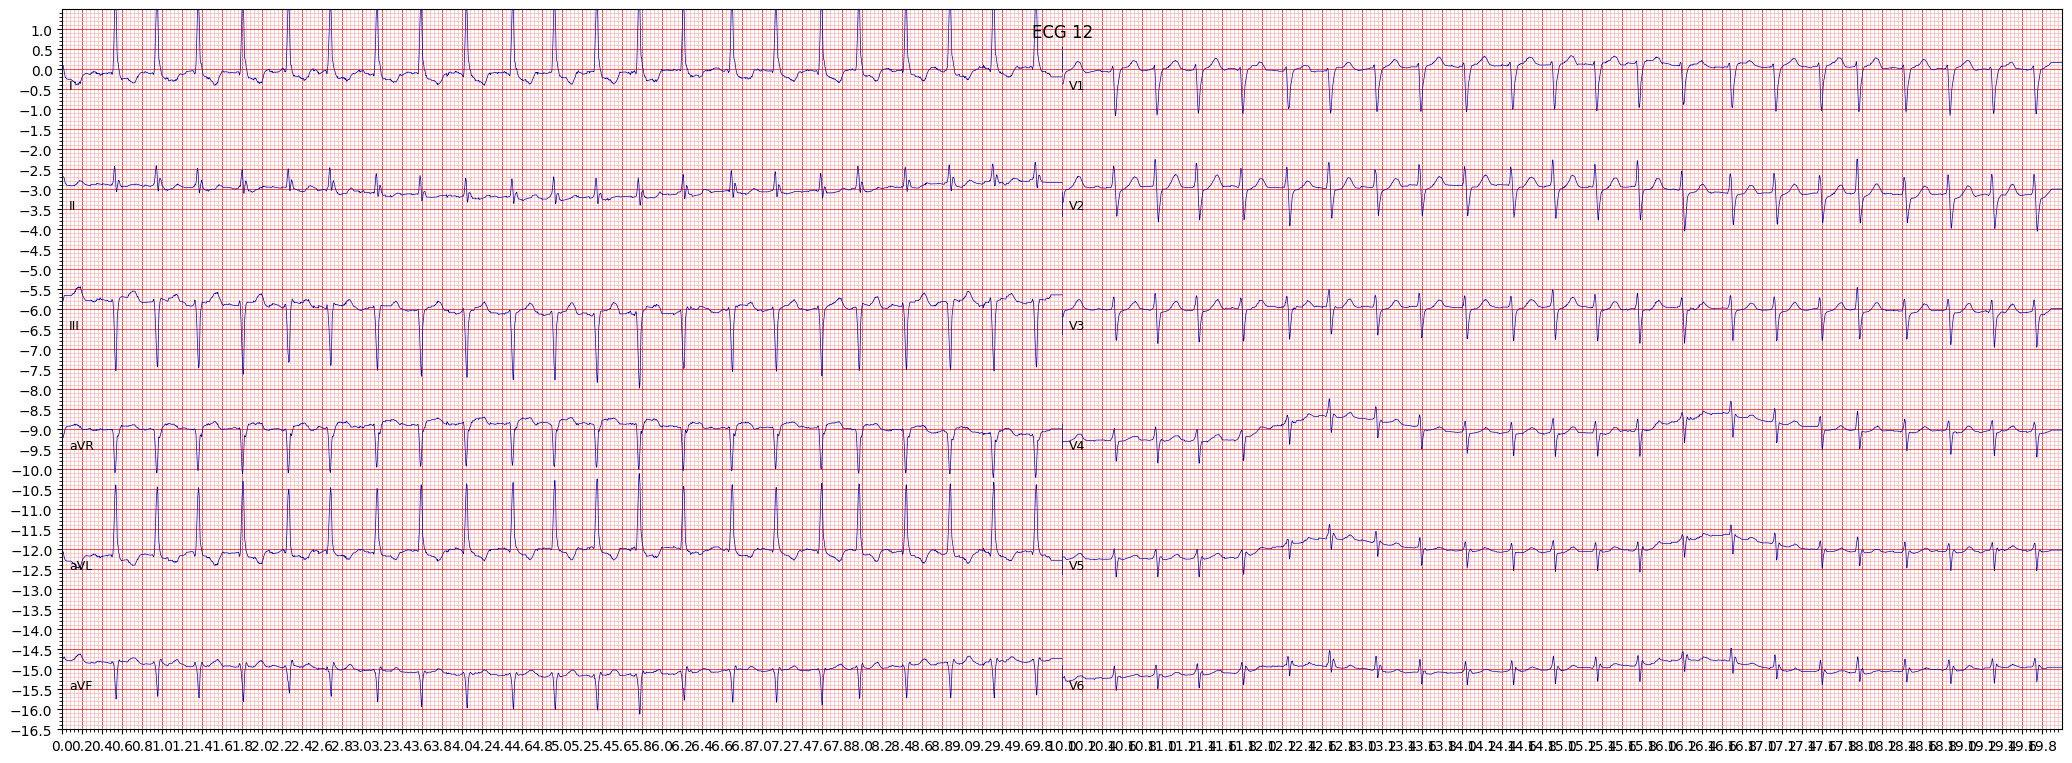 inferior myocardial infarction (IMI) example 567